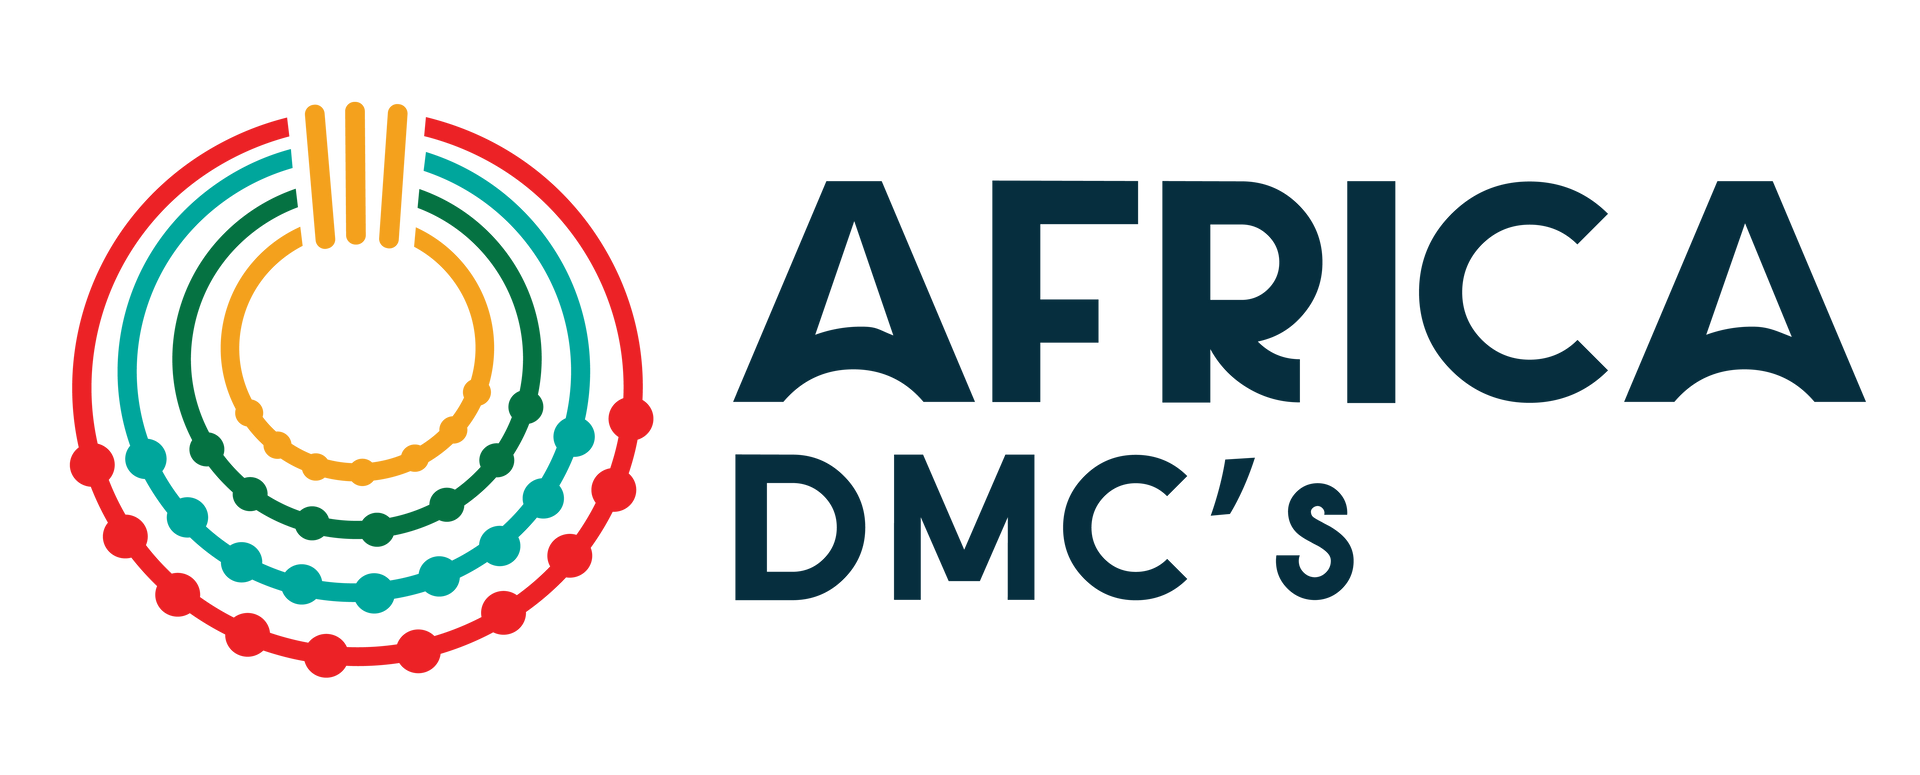 Africa DMC's Logo